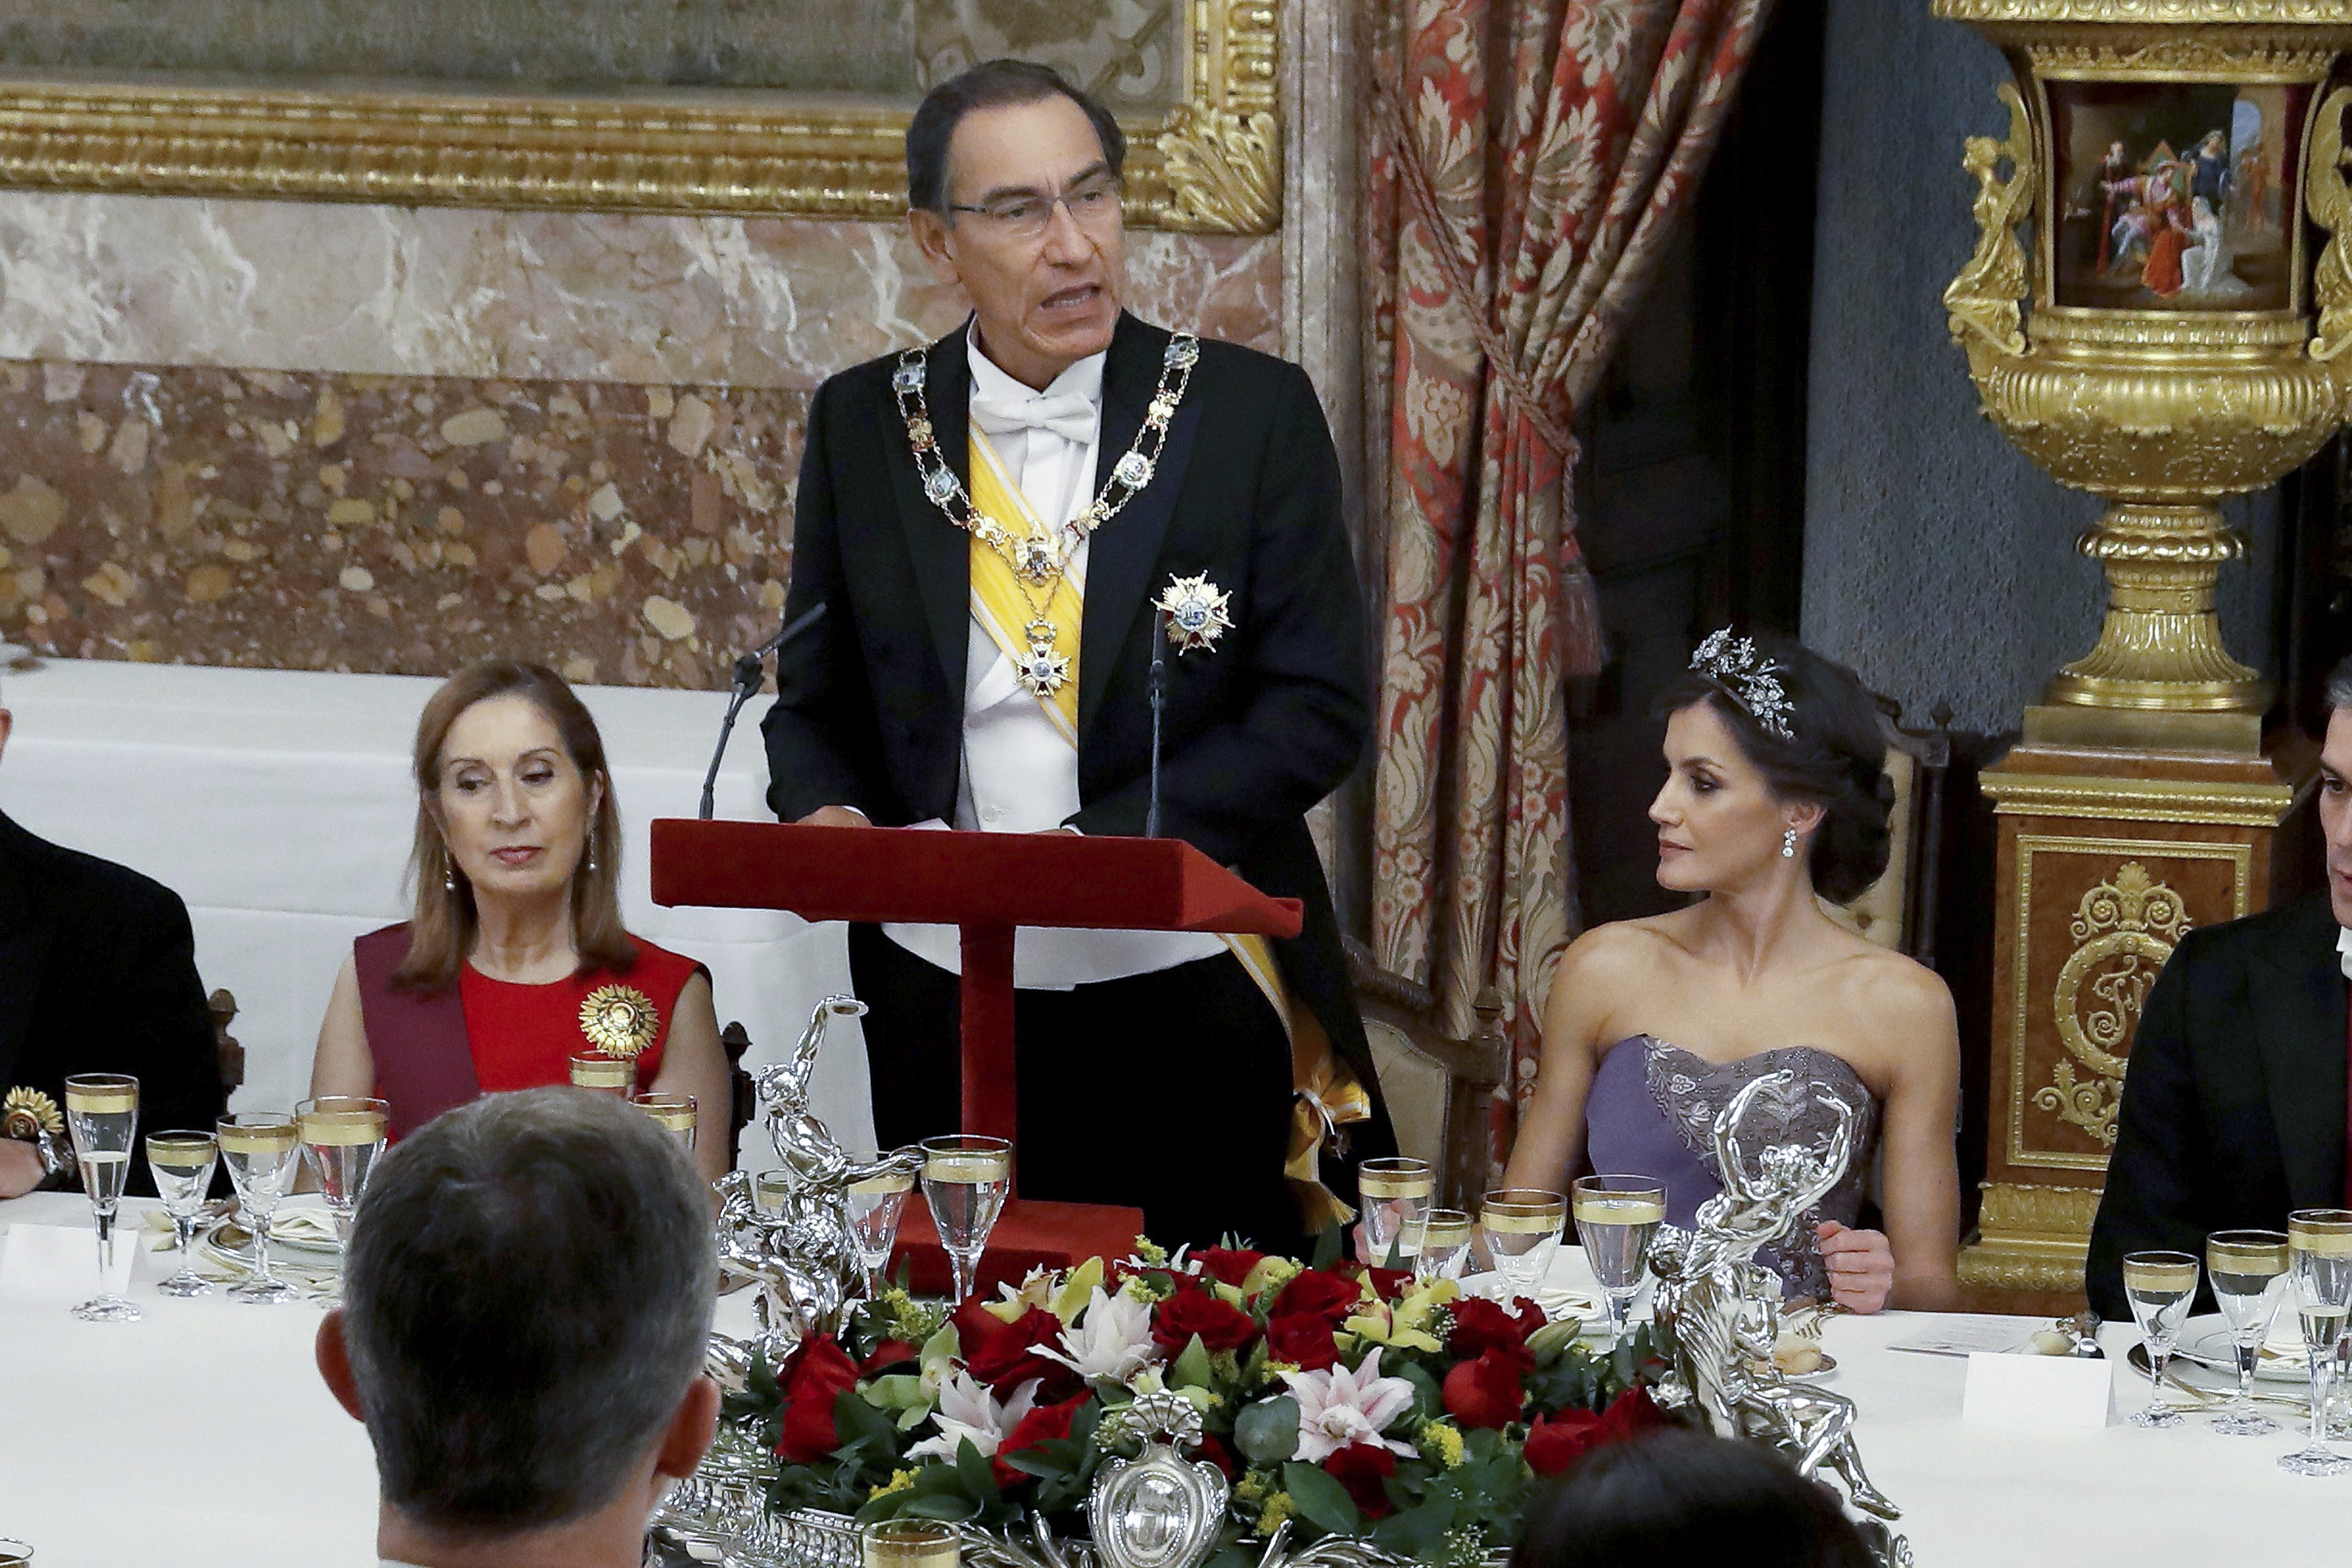 Spanish Royals host a Gala Dinner